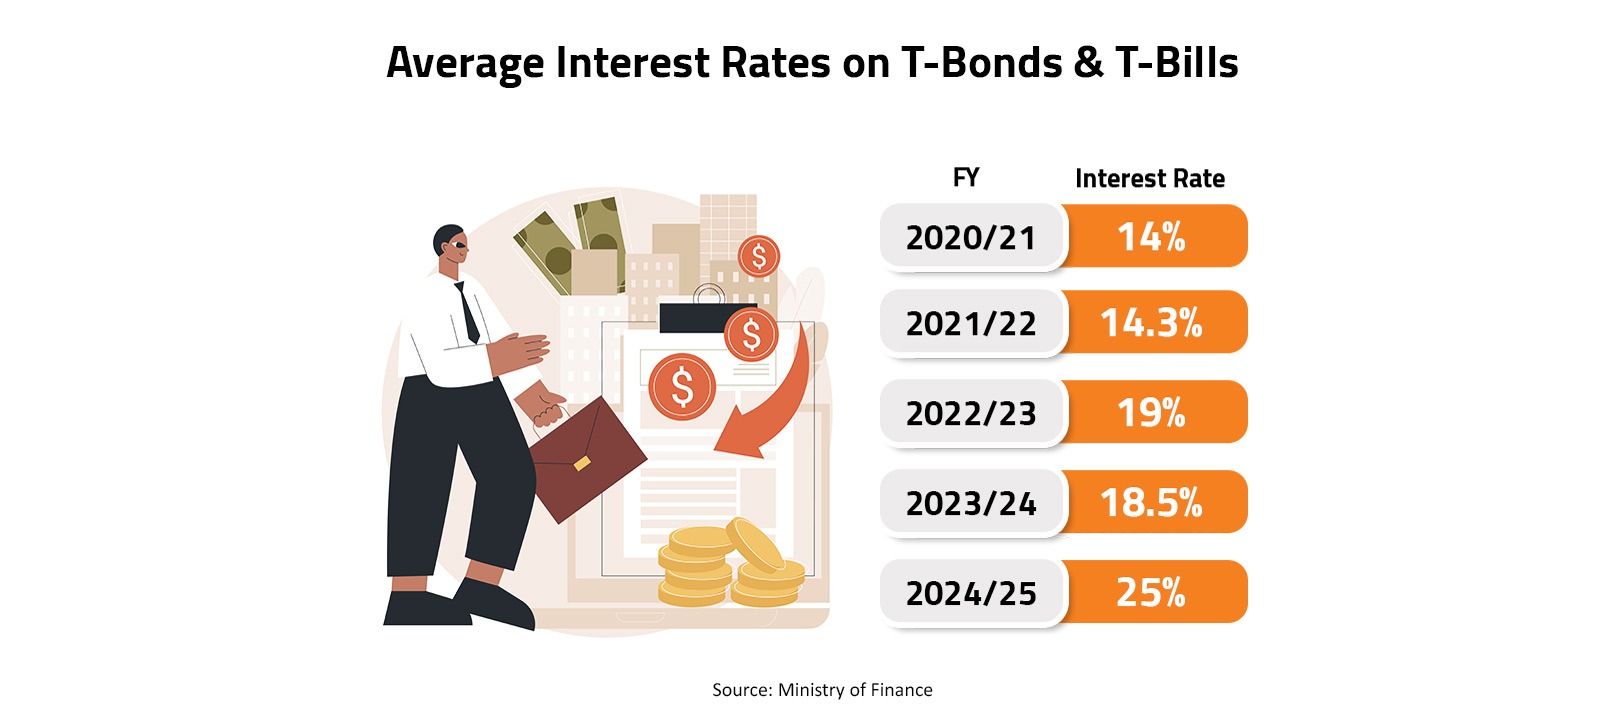 Average Interest Rates on T-Bonds & T-Bills